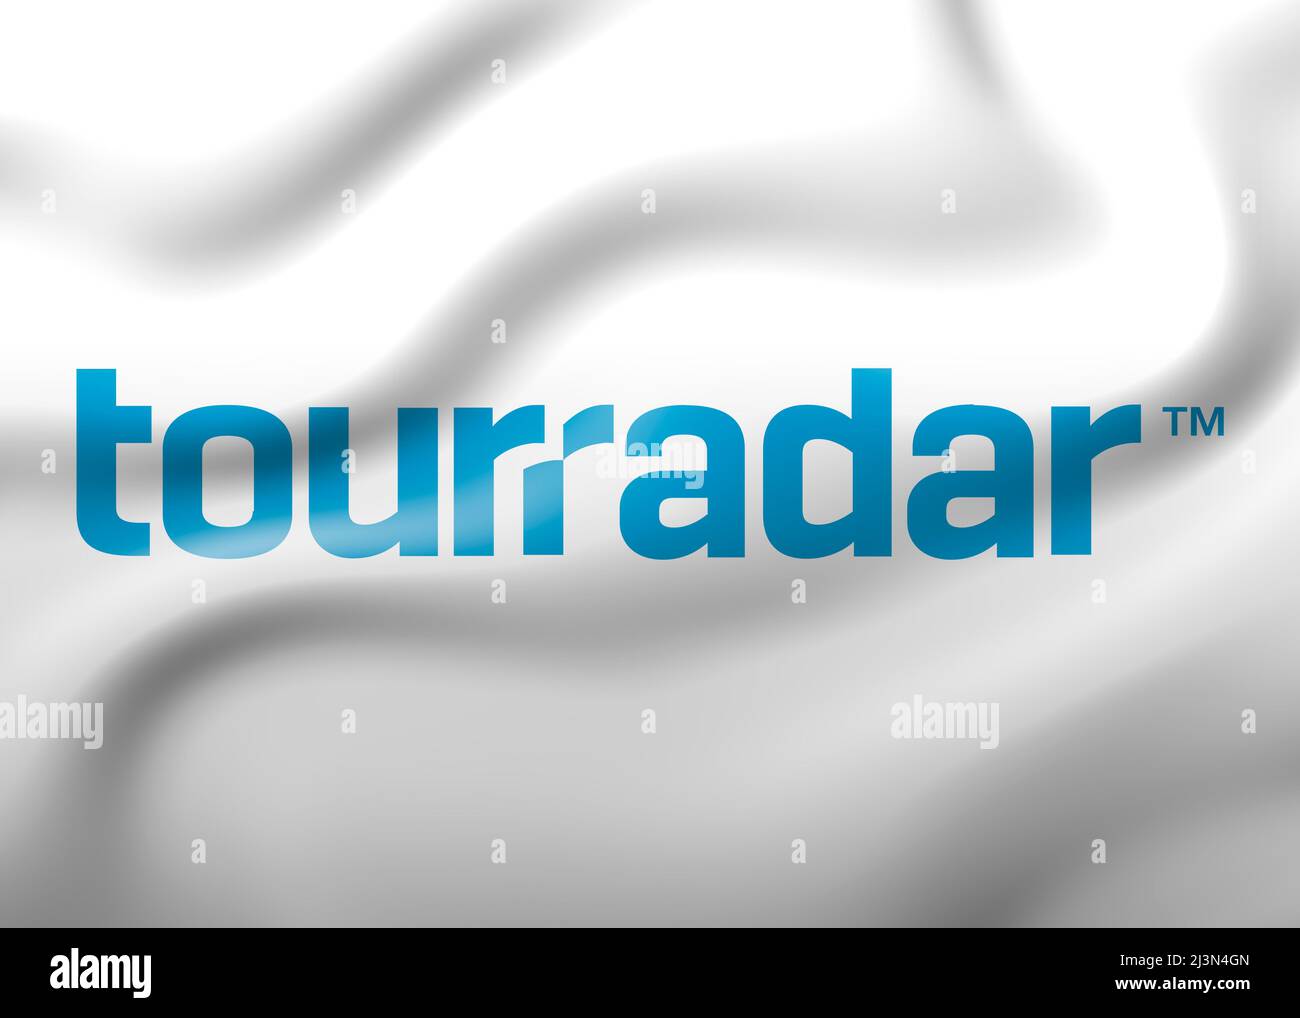 Tourradar logo Stock Photo